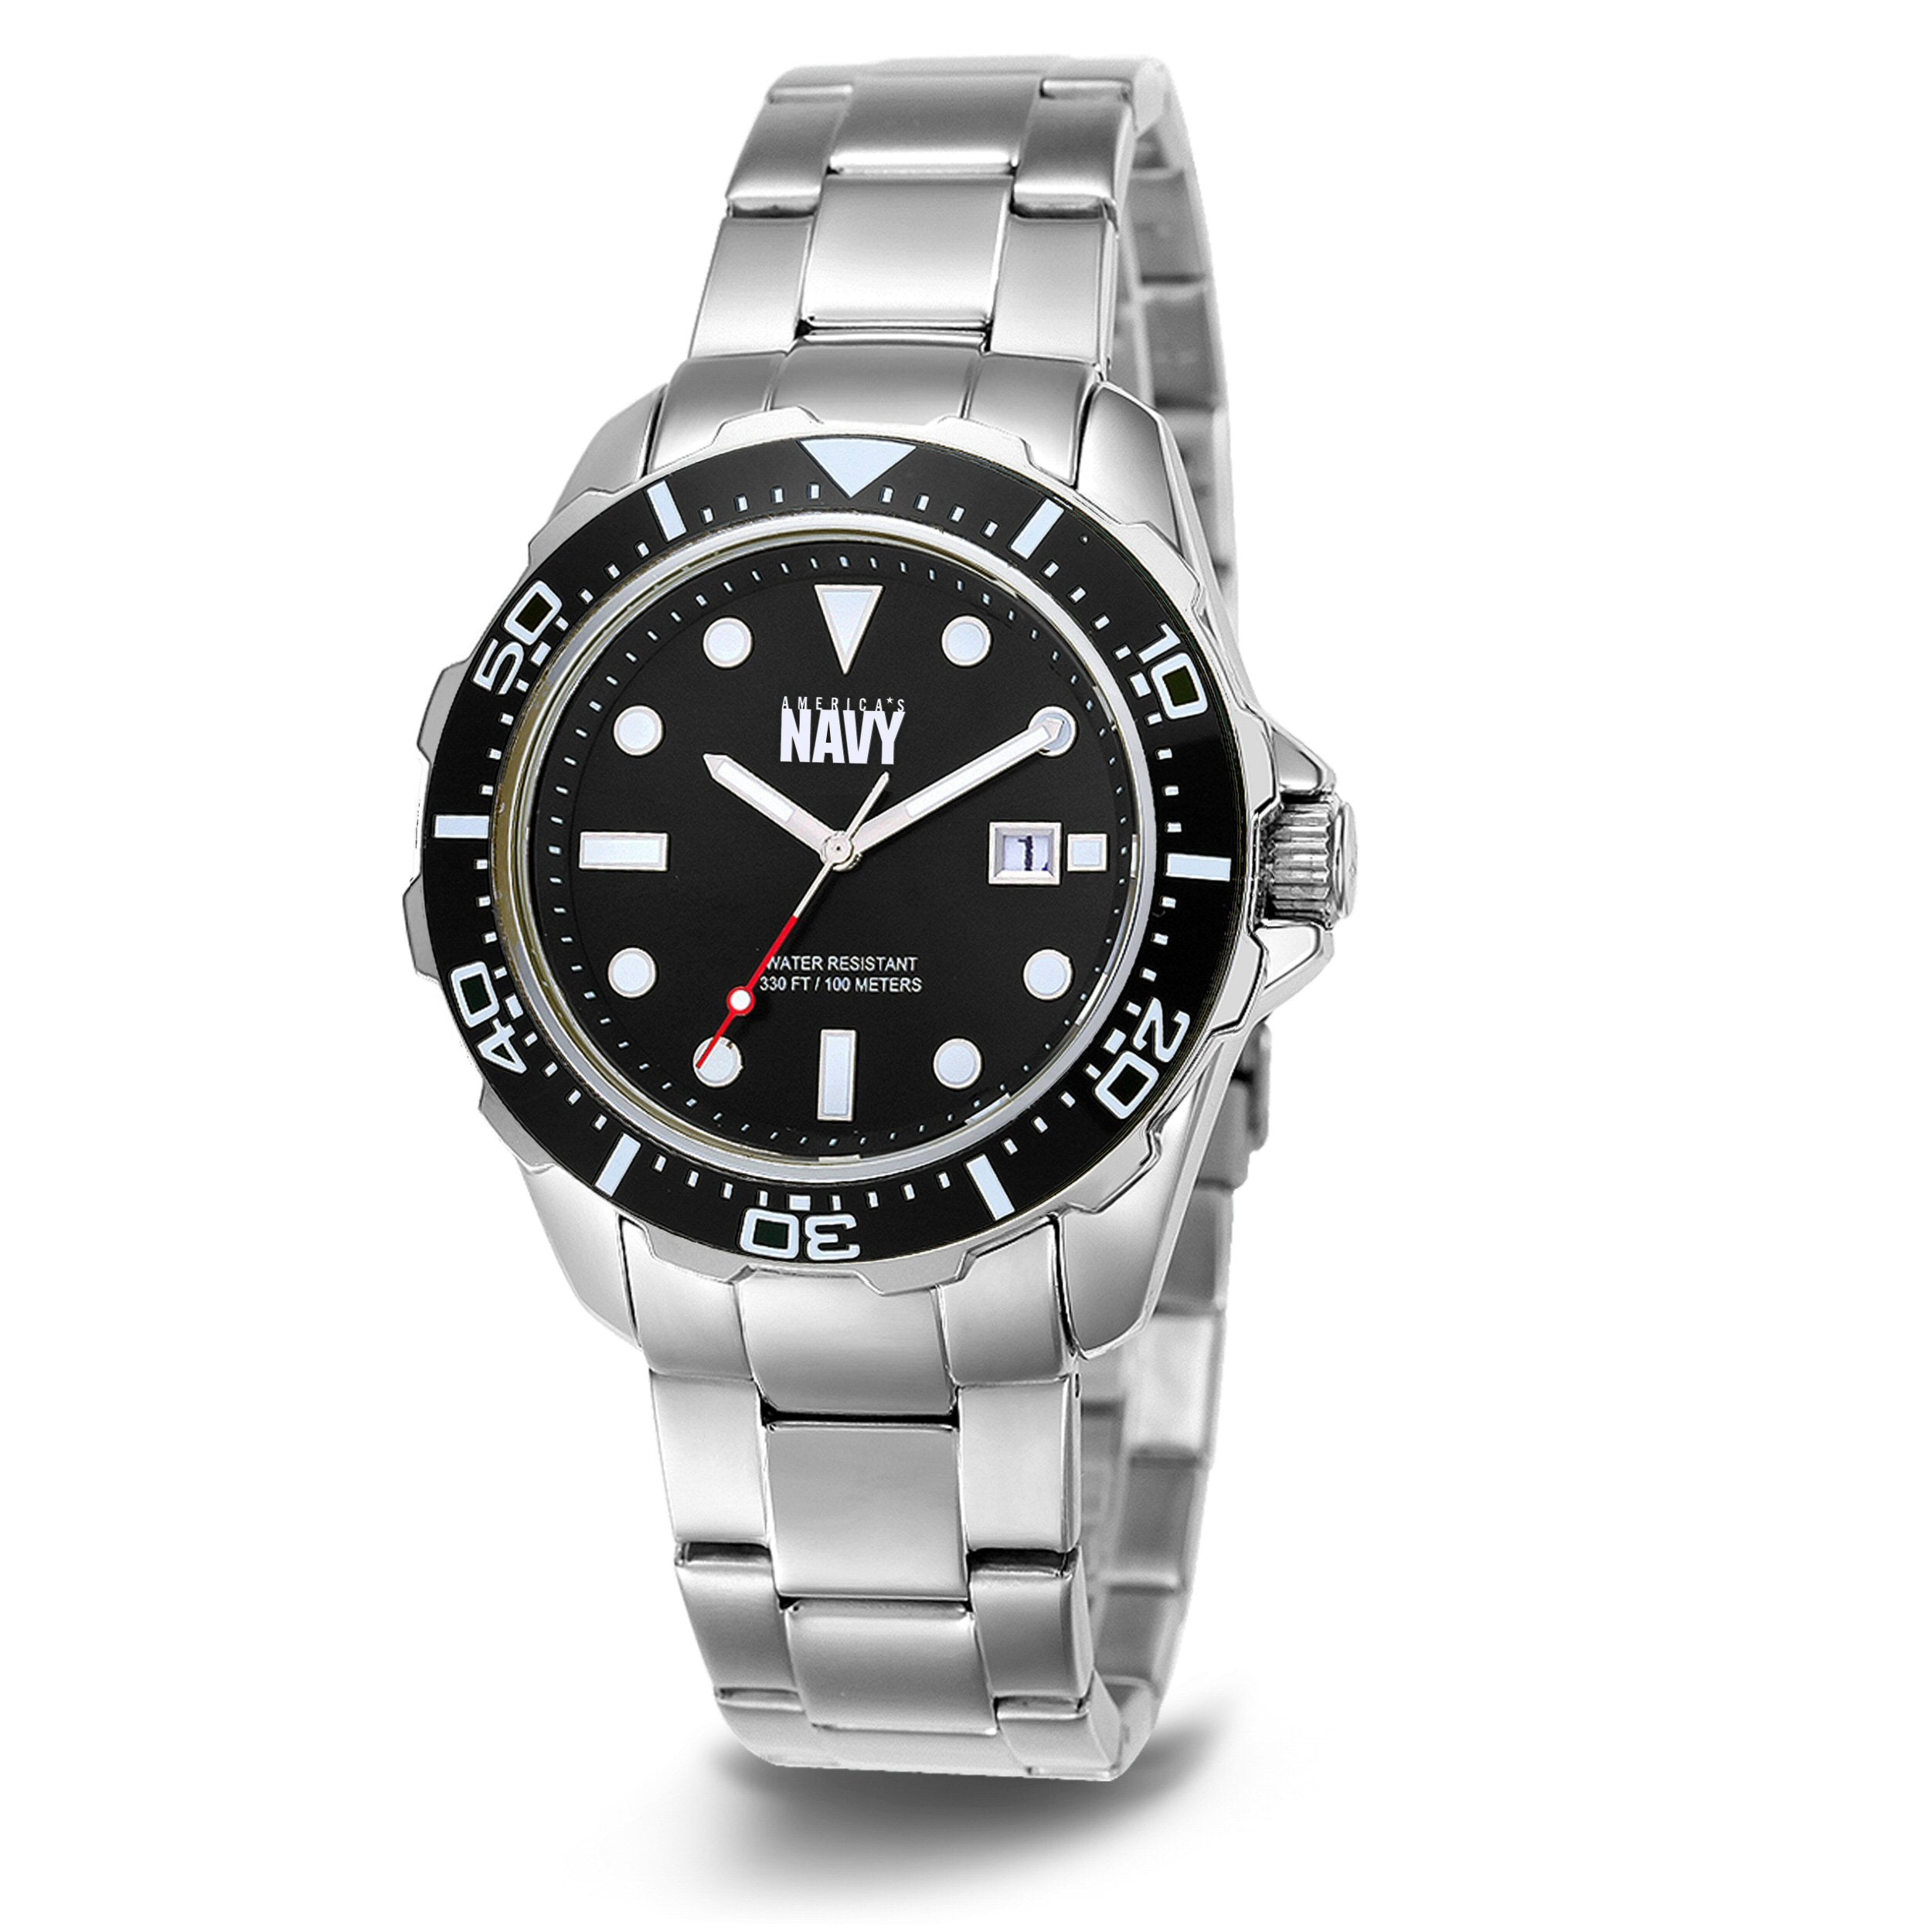 U.S. Navy C39 | Analog Display Quartz Watch with Unidirectional Rotating Bezel and Metal Bracelet